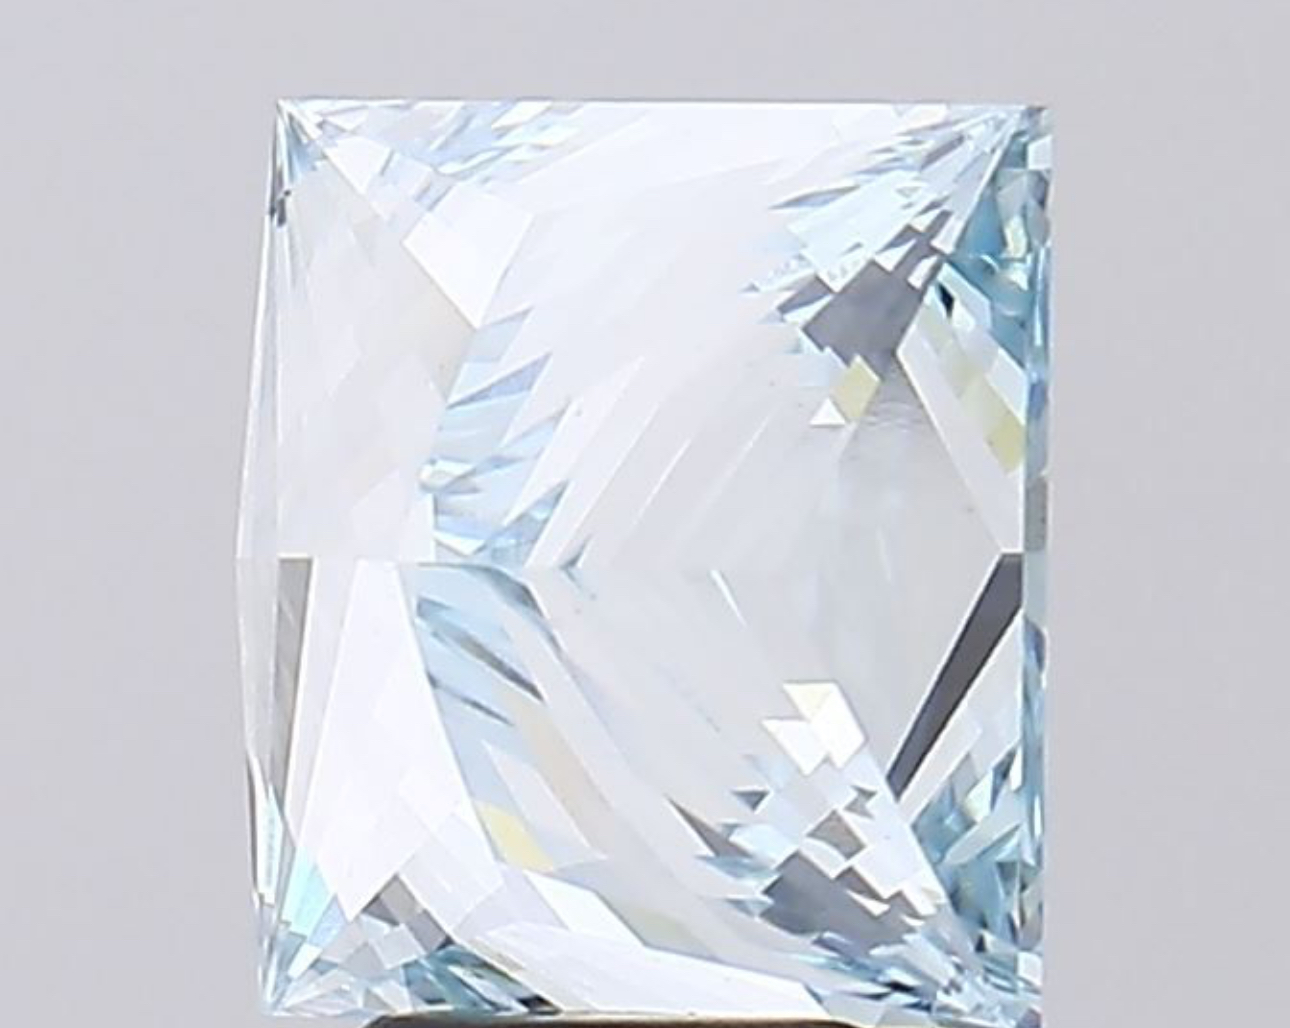 ** ON SALE ** Princess Cut Diamond 5.01 Carat Fancy Intense Blue VS1 Clarity EX EX - IGI - Image 5 of 8